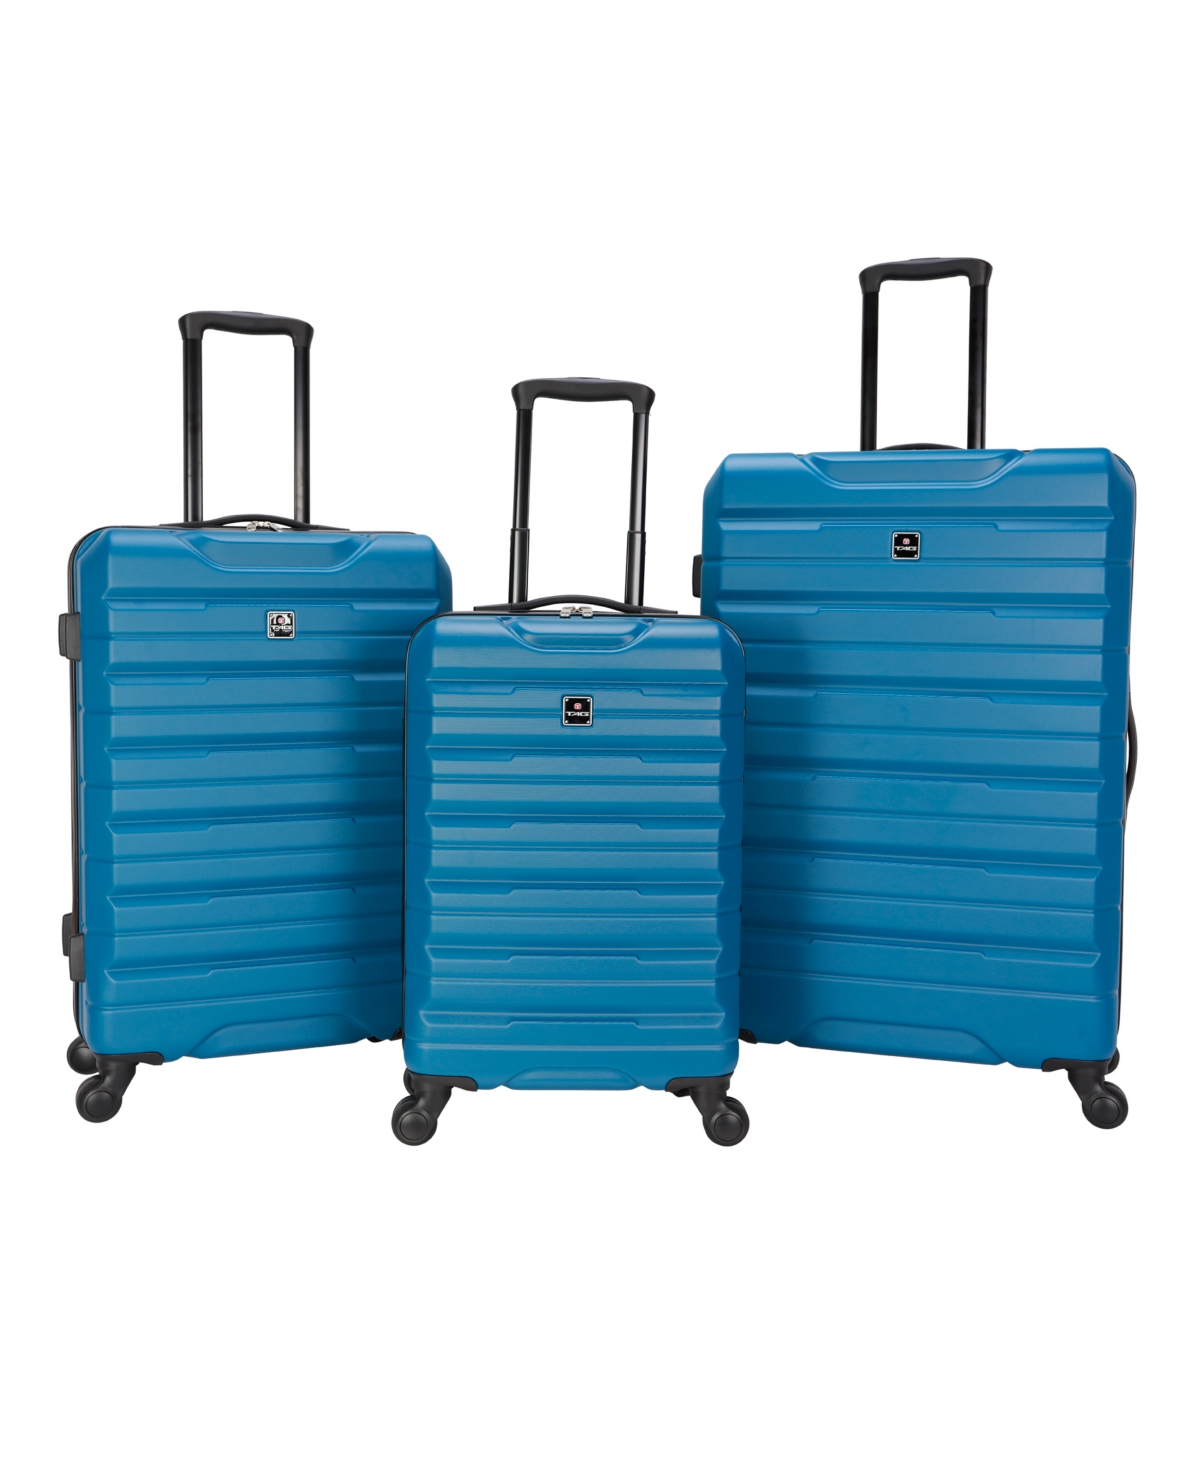 Tag Gateway 3 Piece Hardside Luggage Set In Teal Blue